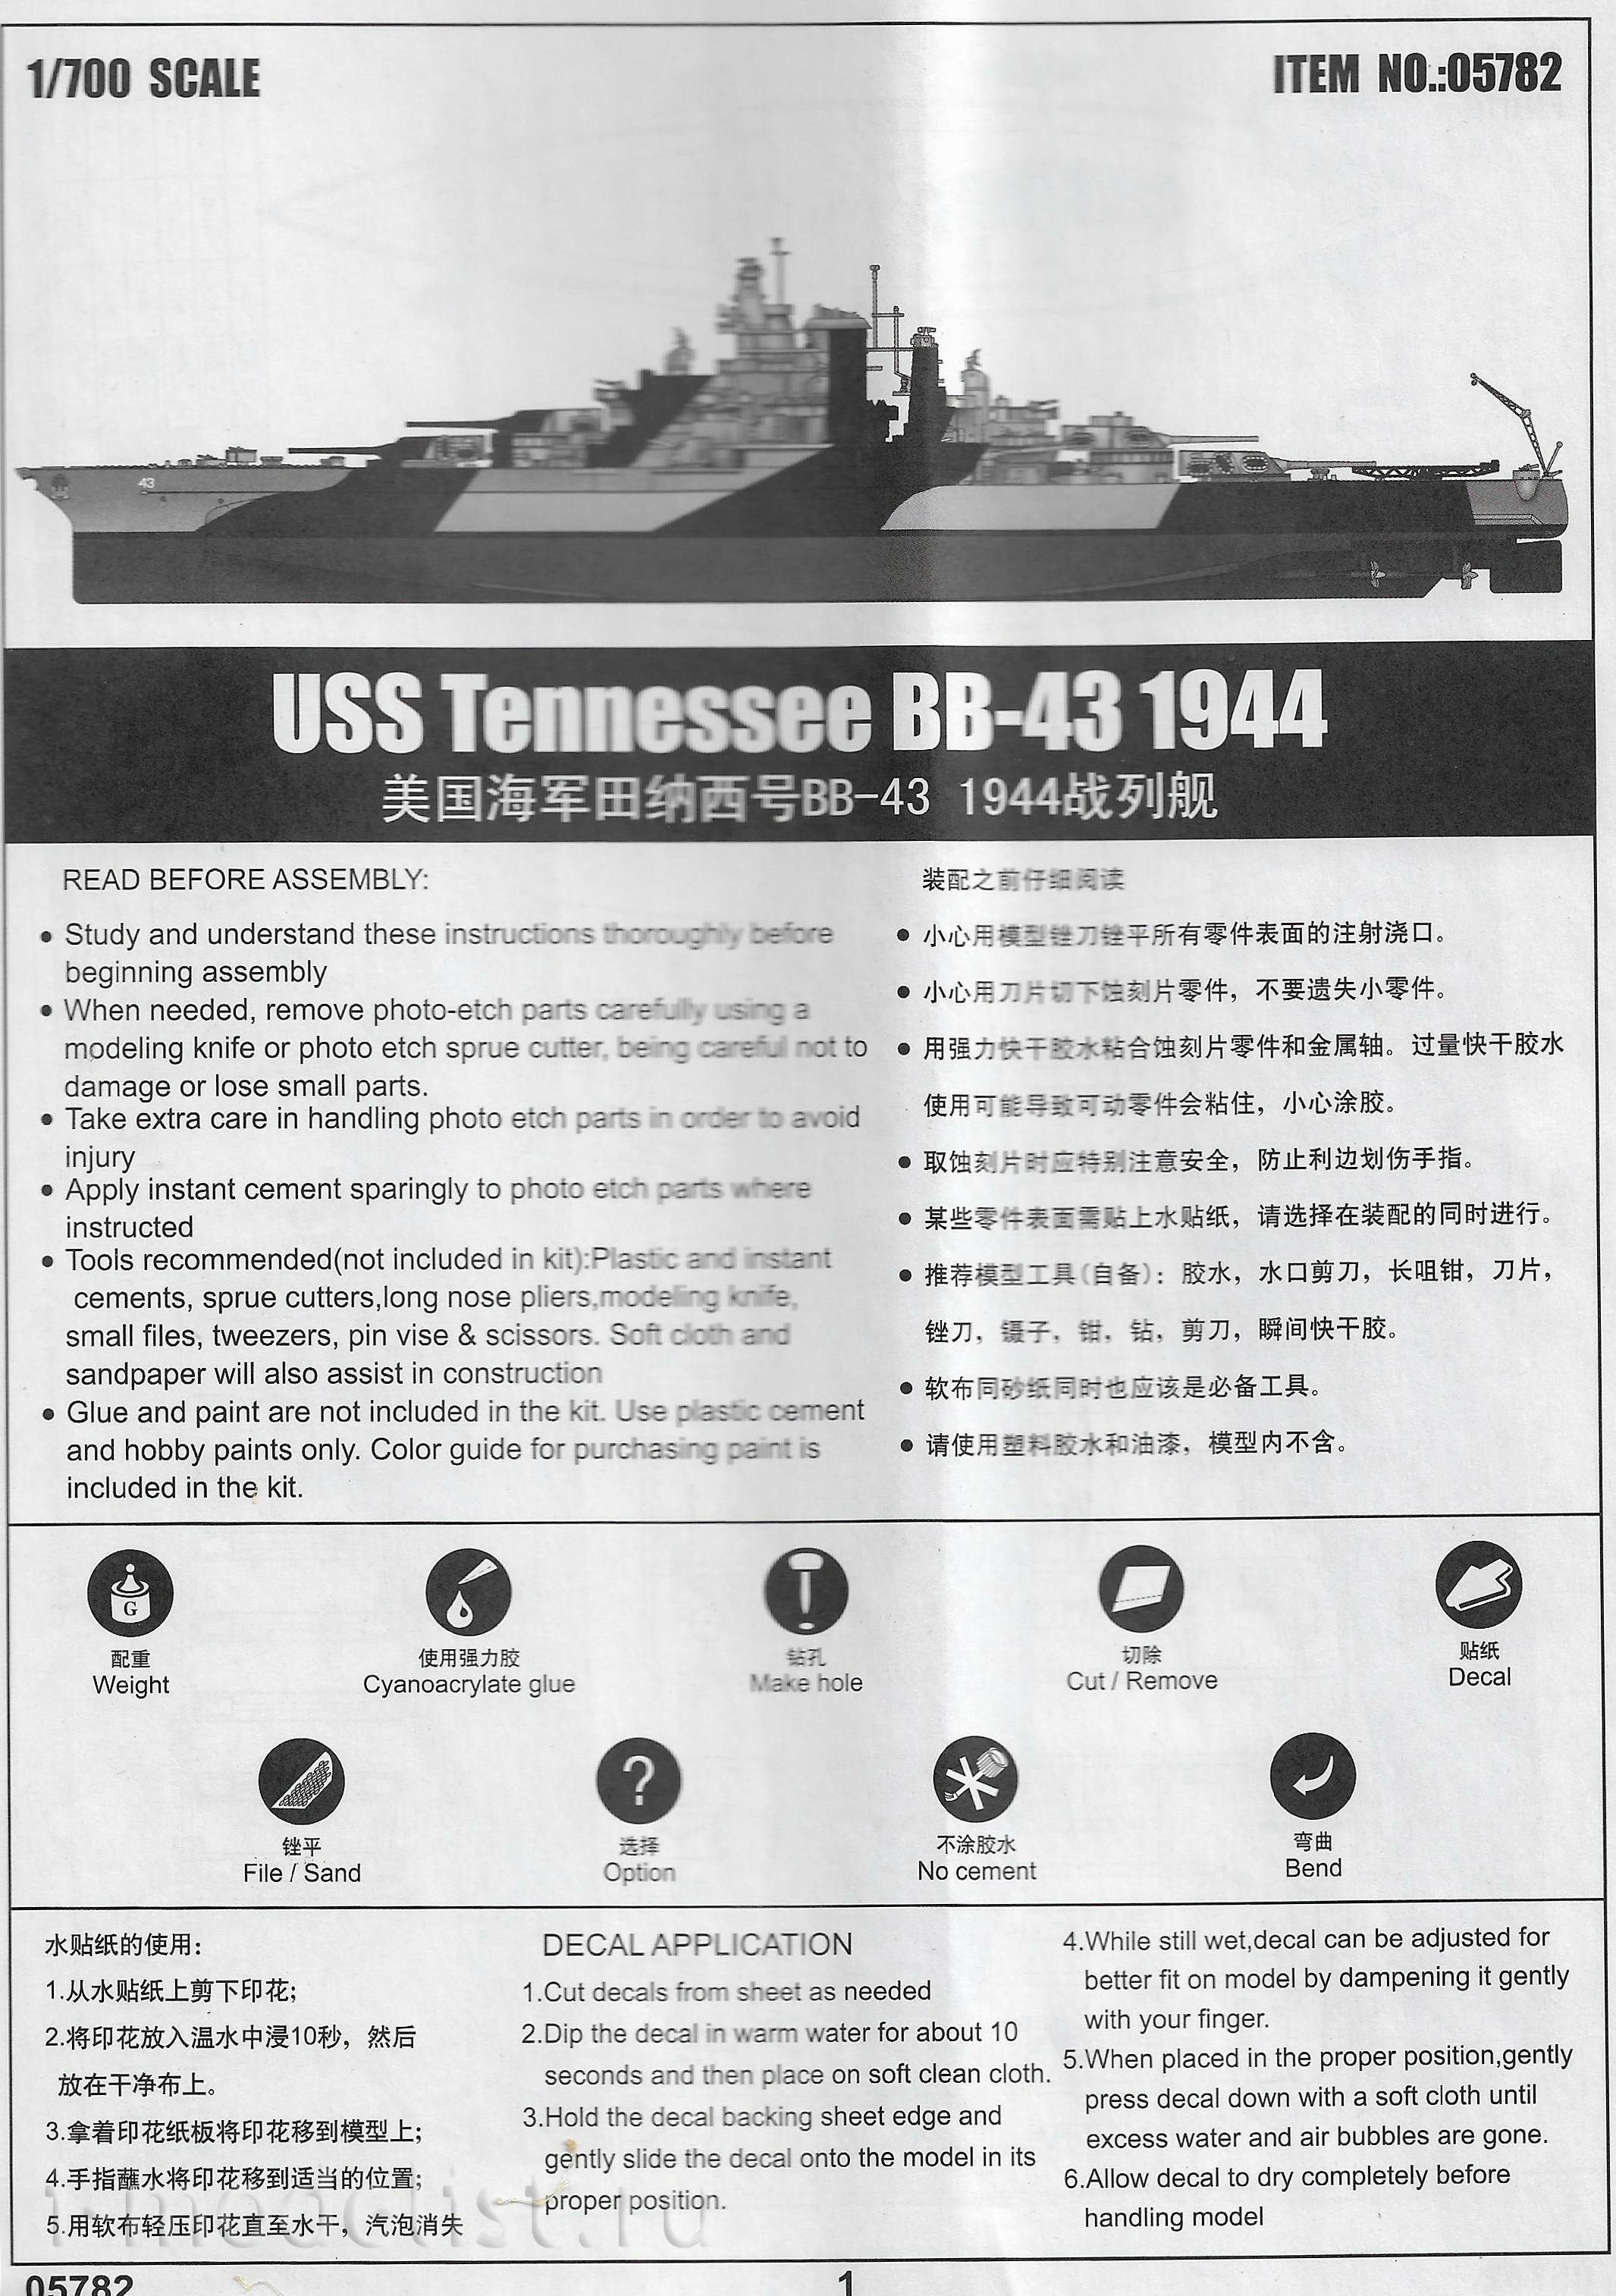 05782 I-Modeler Glue Liquid Plus Gift Trumpeter 1/700 USS Tennessee BB-43 1944